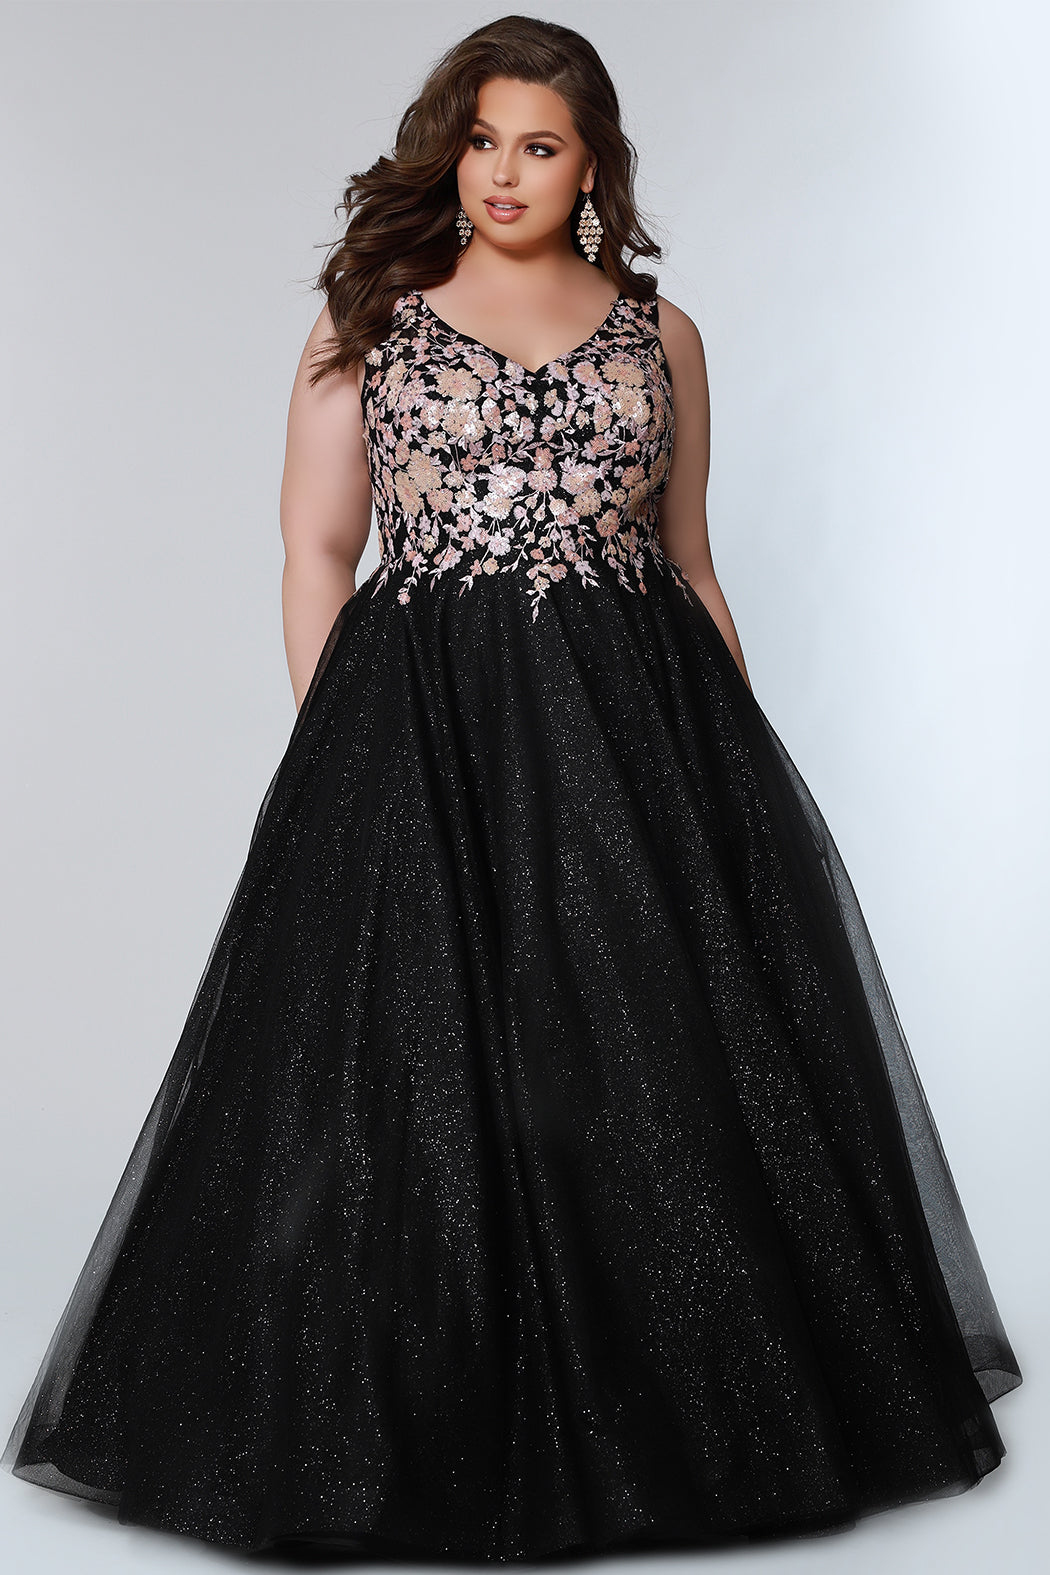 Plus Size Black Tulle Dress: Rose Bodice | Sydney's Closet